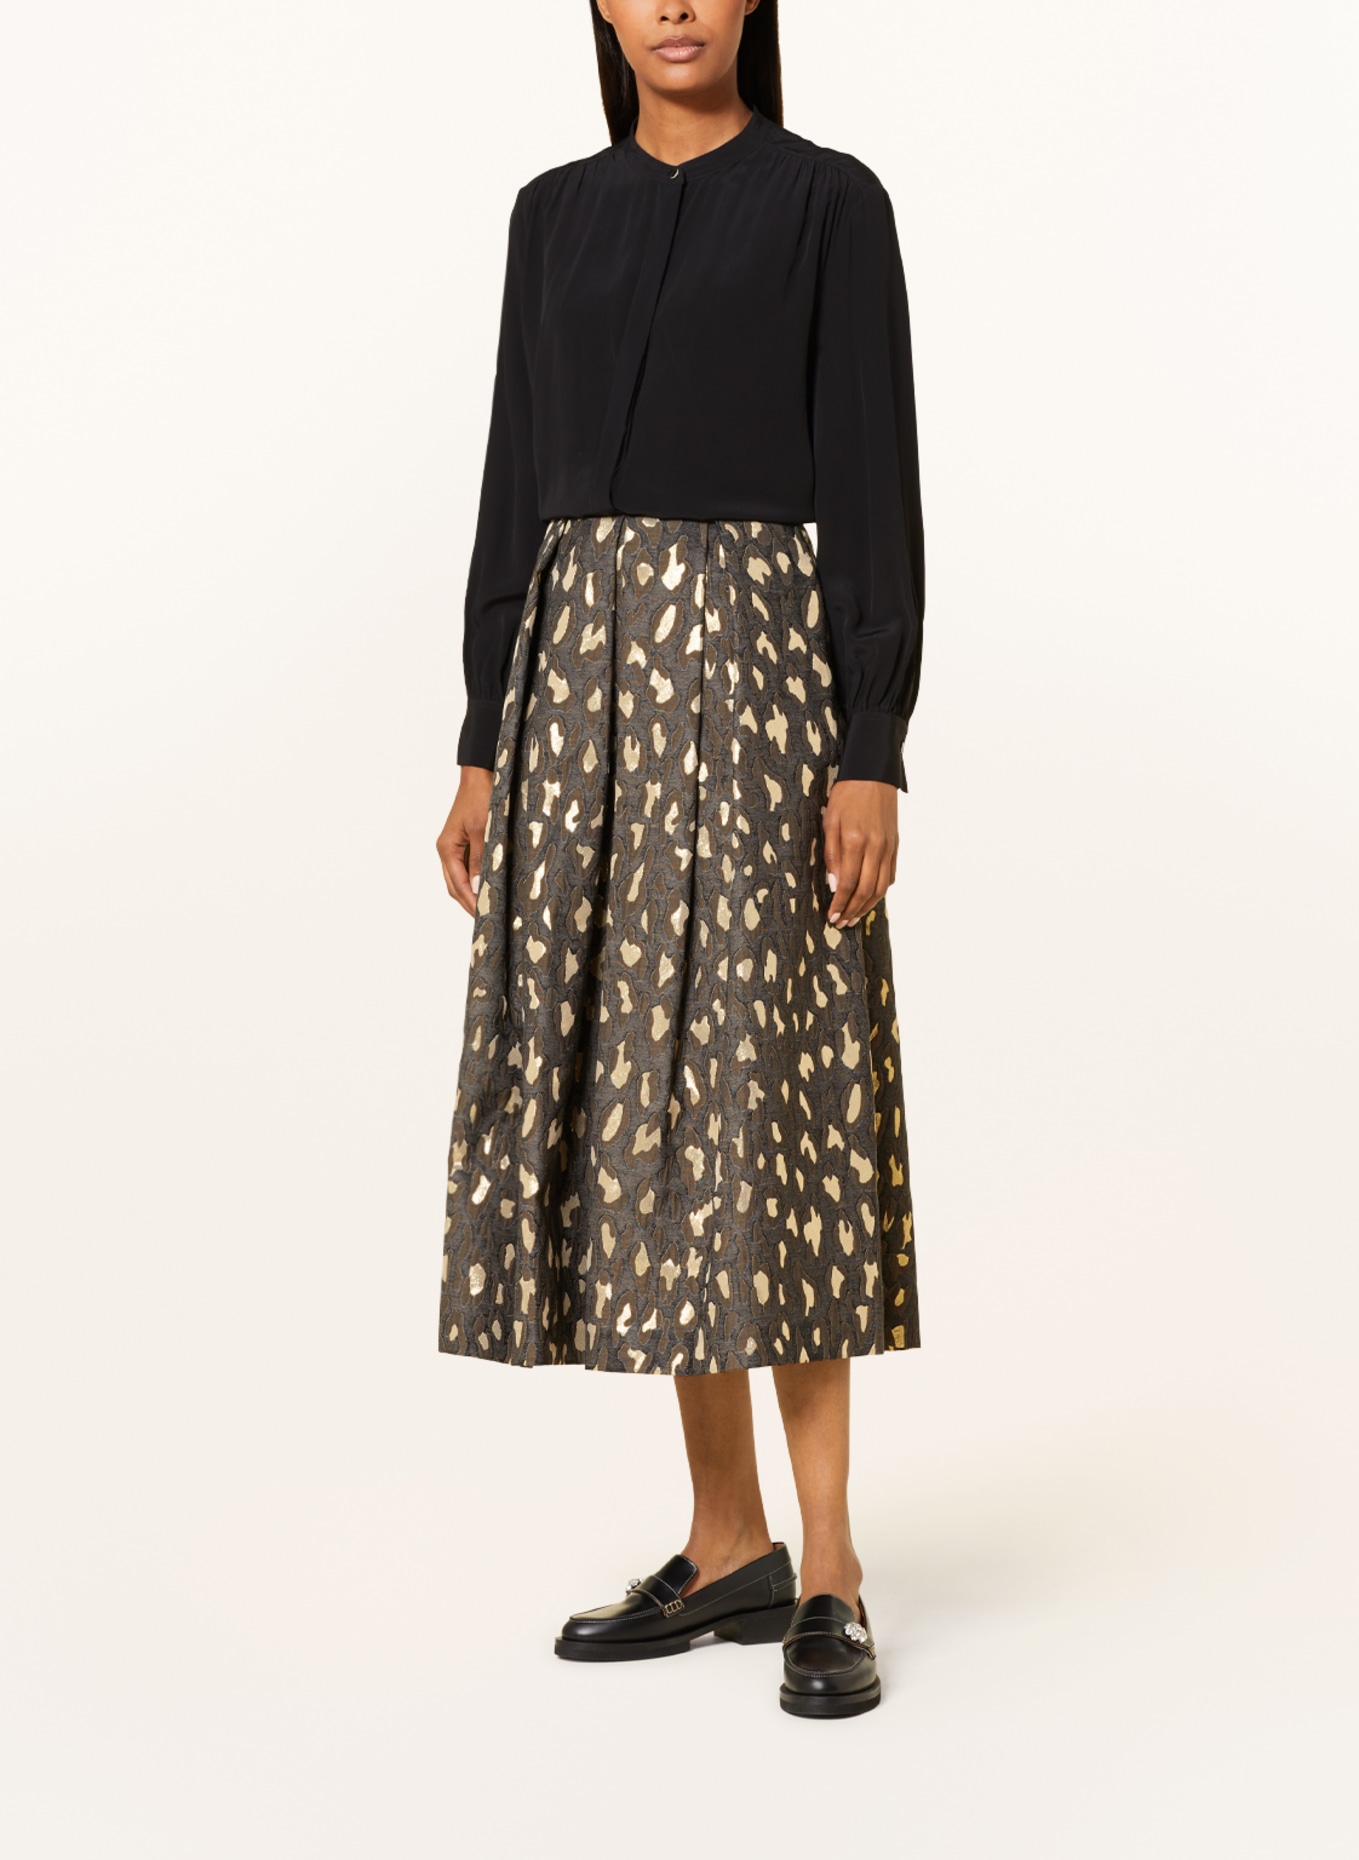 LUNATICA MILANO Jacquard skirt with glitter thread, Color: DARK GRAY/ GOLD (Image 2)